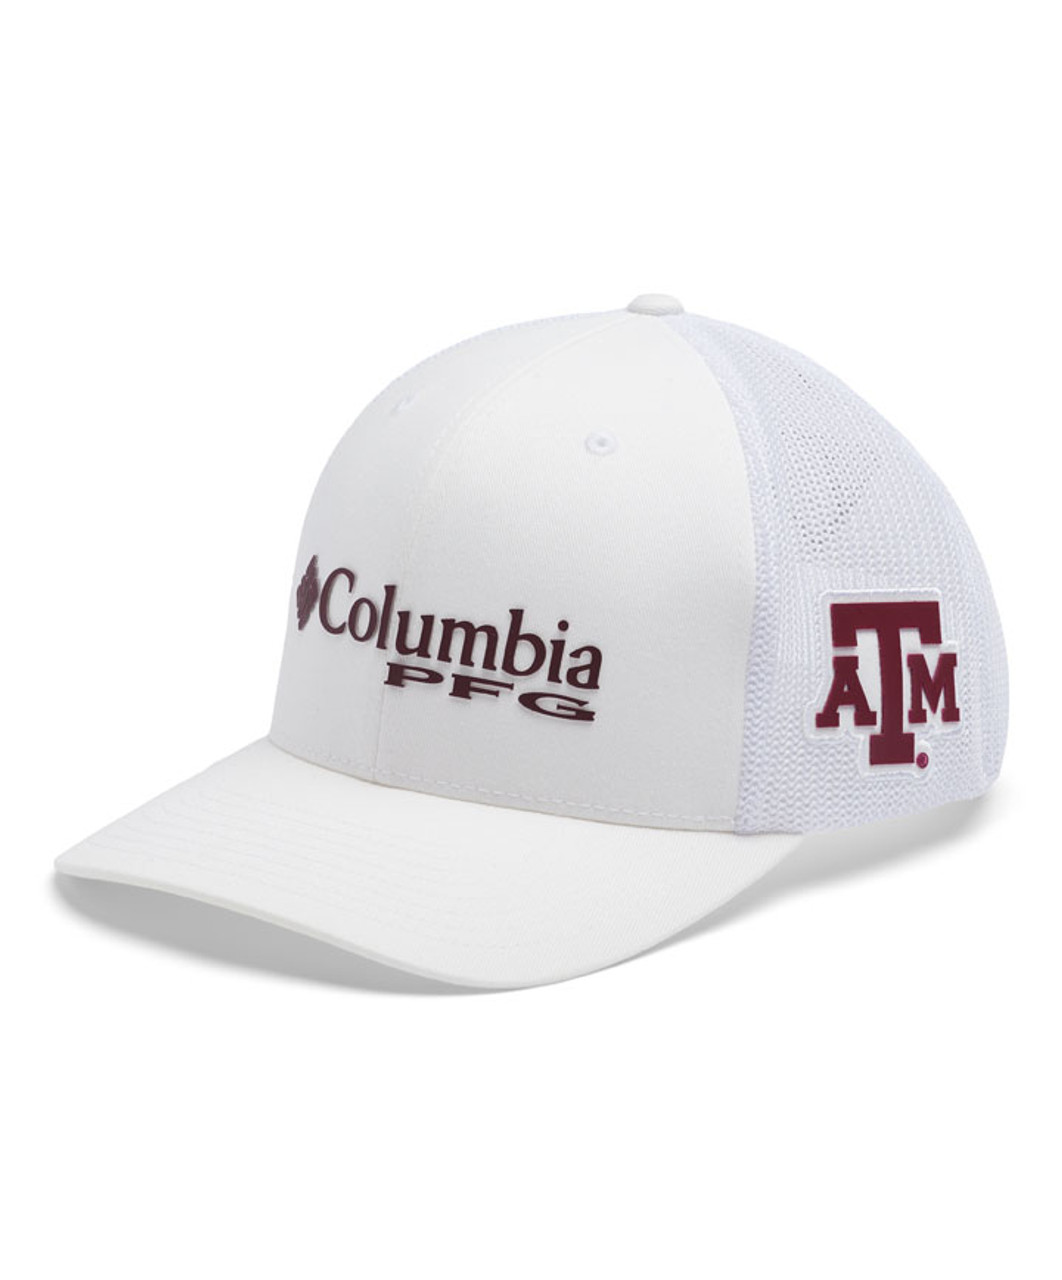 Columbia Men`s Mesh Snapback Cap (White(XU0176-051)/Grey, One Size